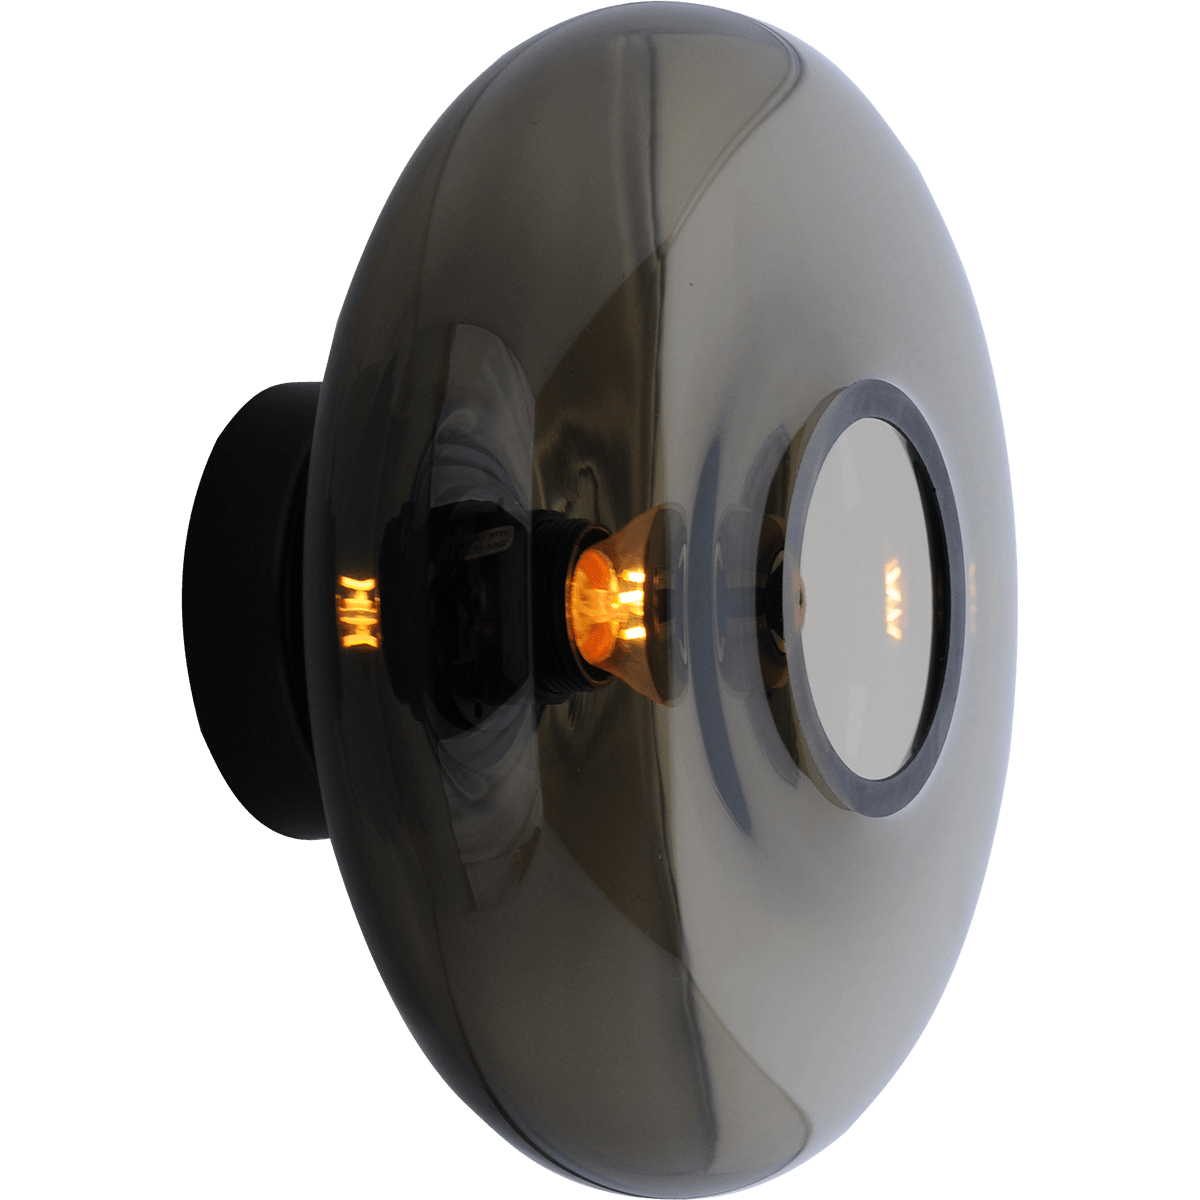 Wandlamp Hoseki matt zwart - glas smoke Ø23 -5cm - 1x E27 - MASTERLIGHT